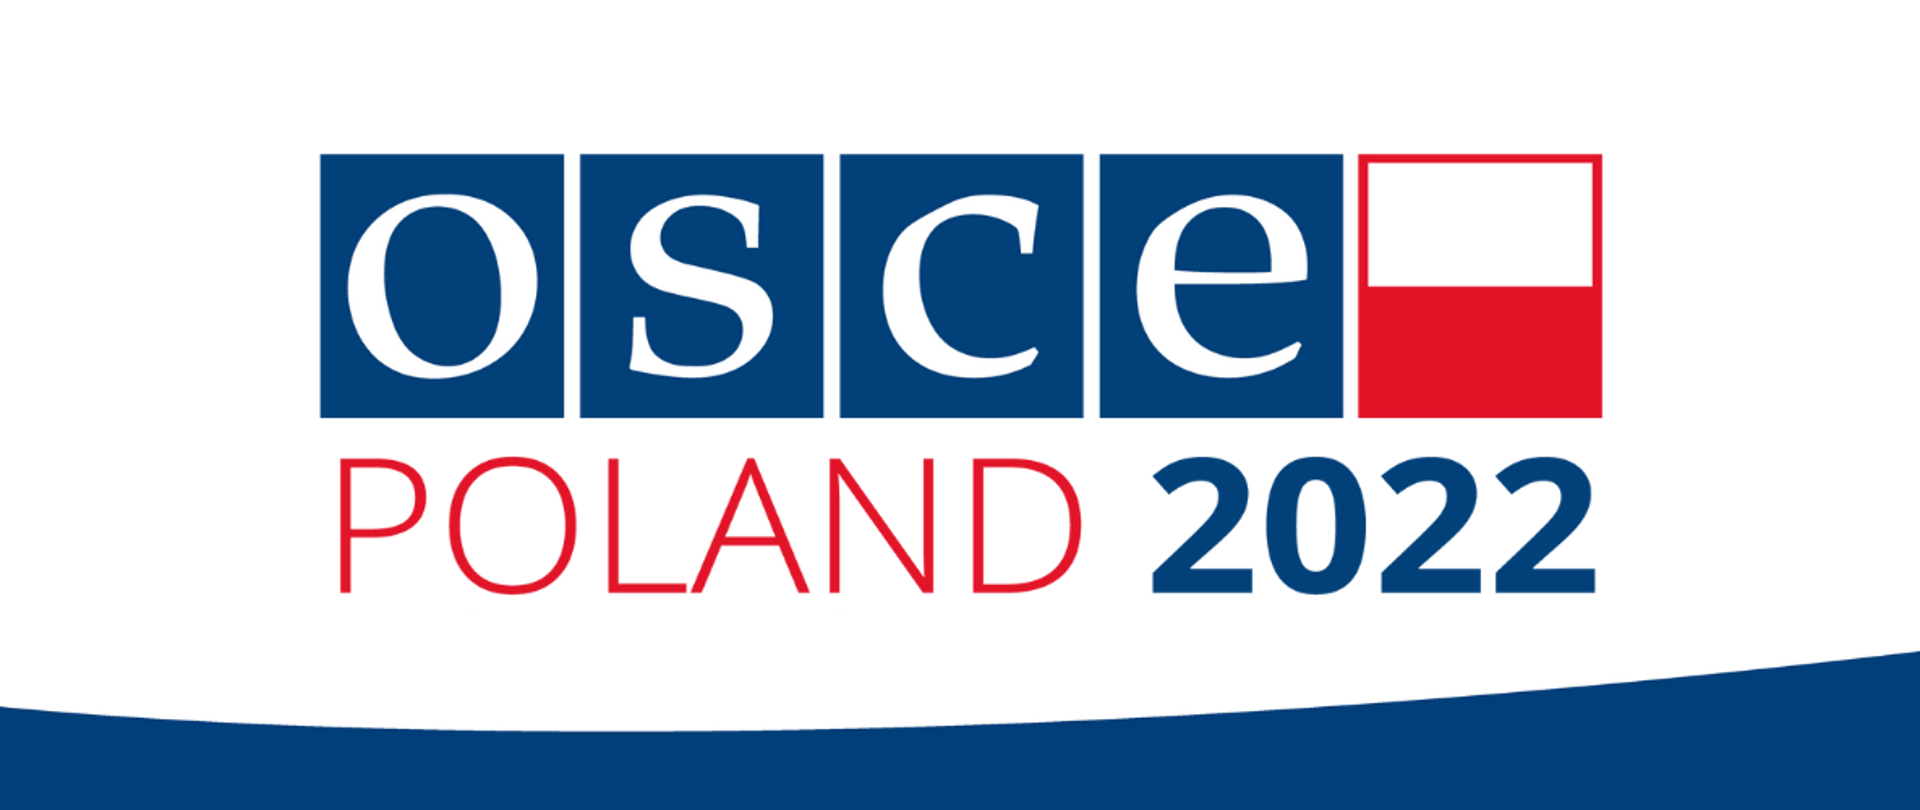 Poland's Chairmanship at the OSCE